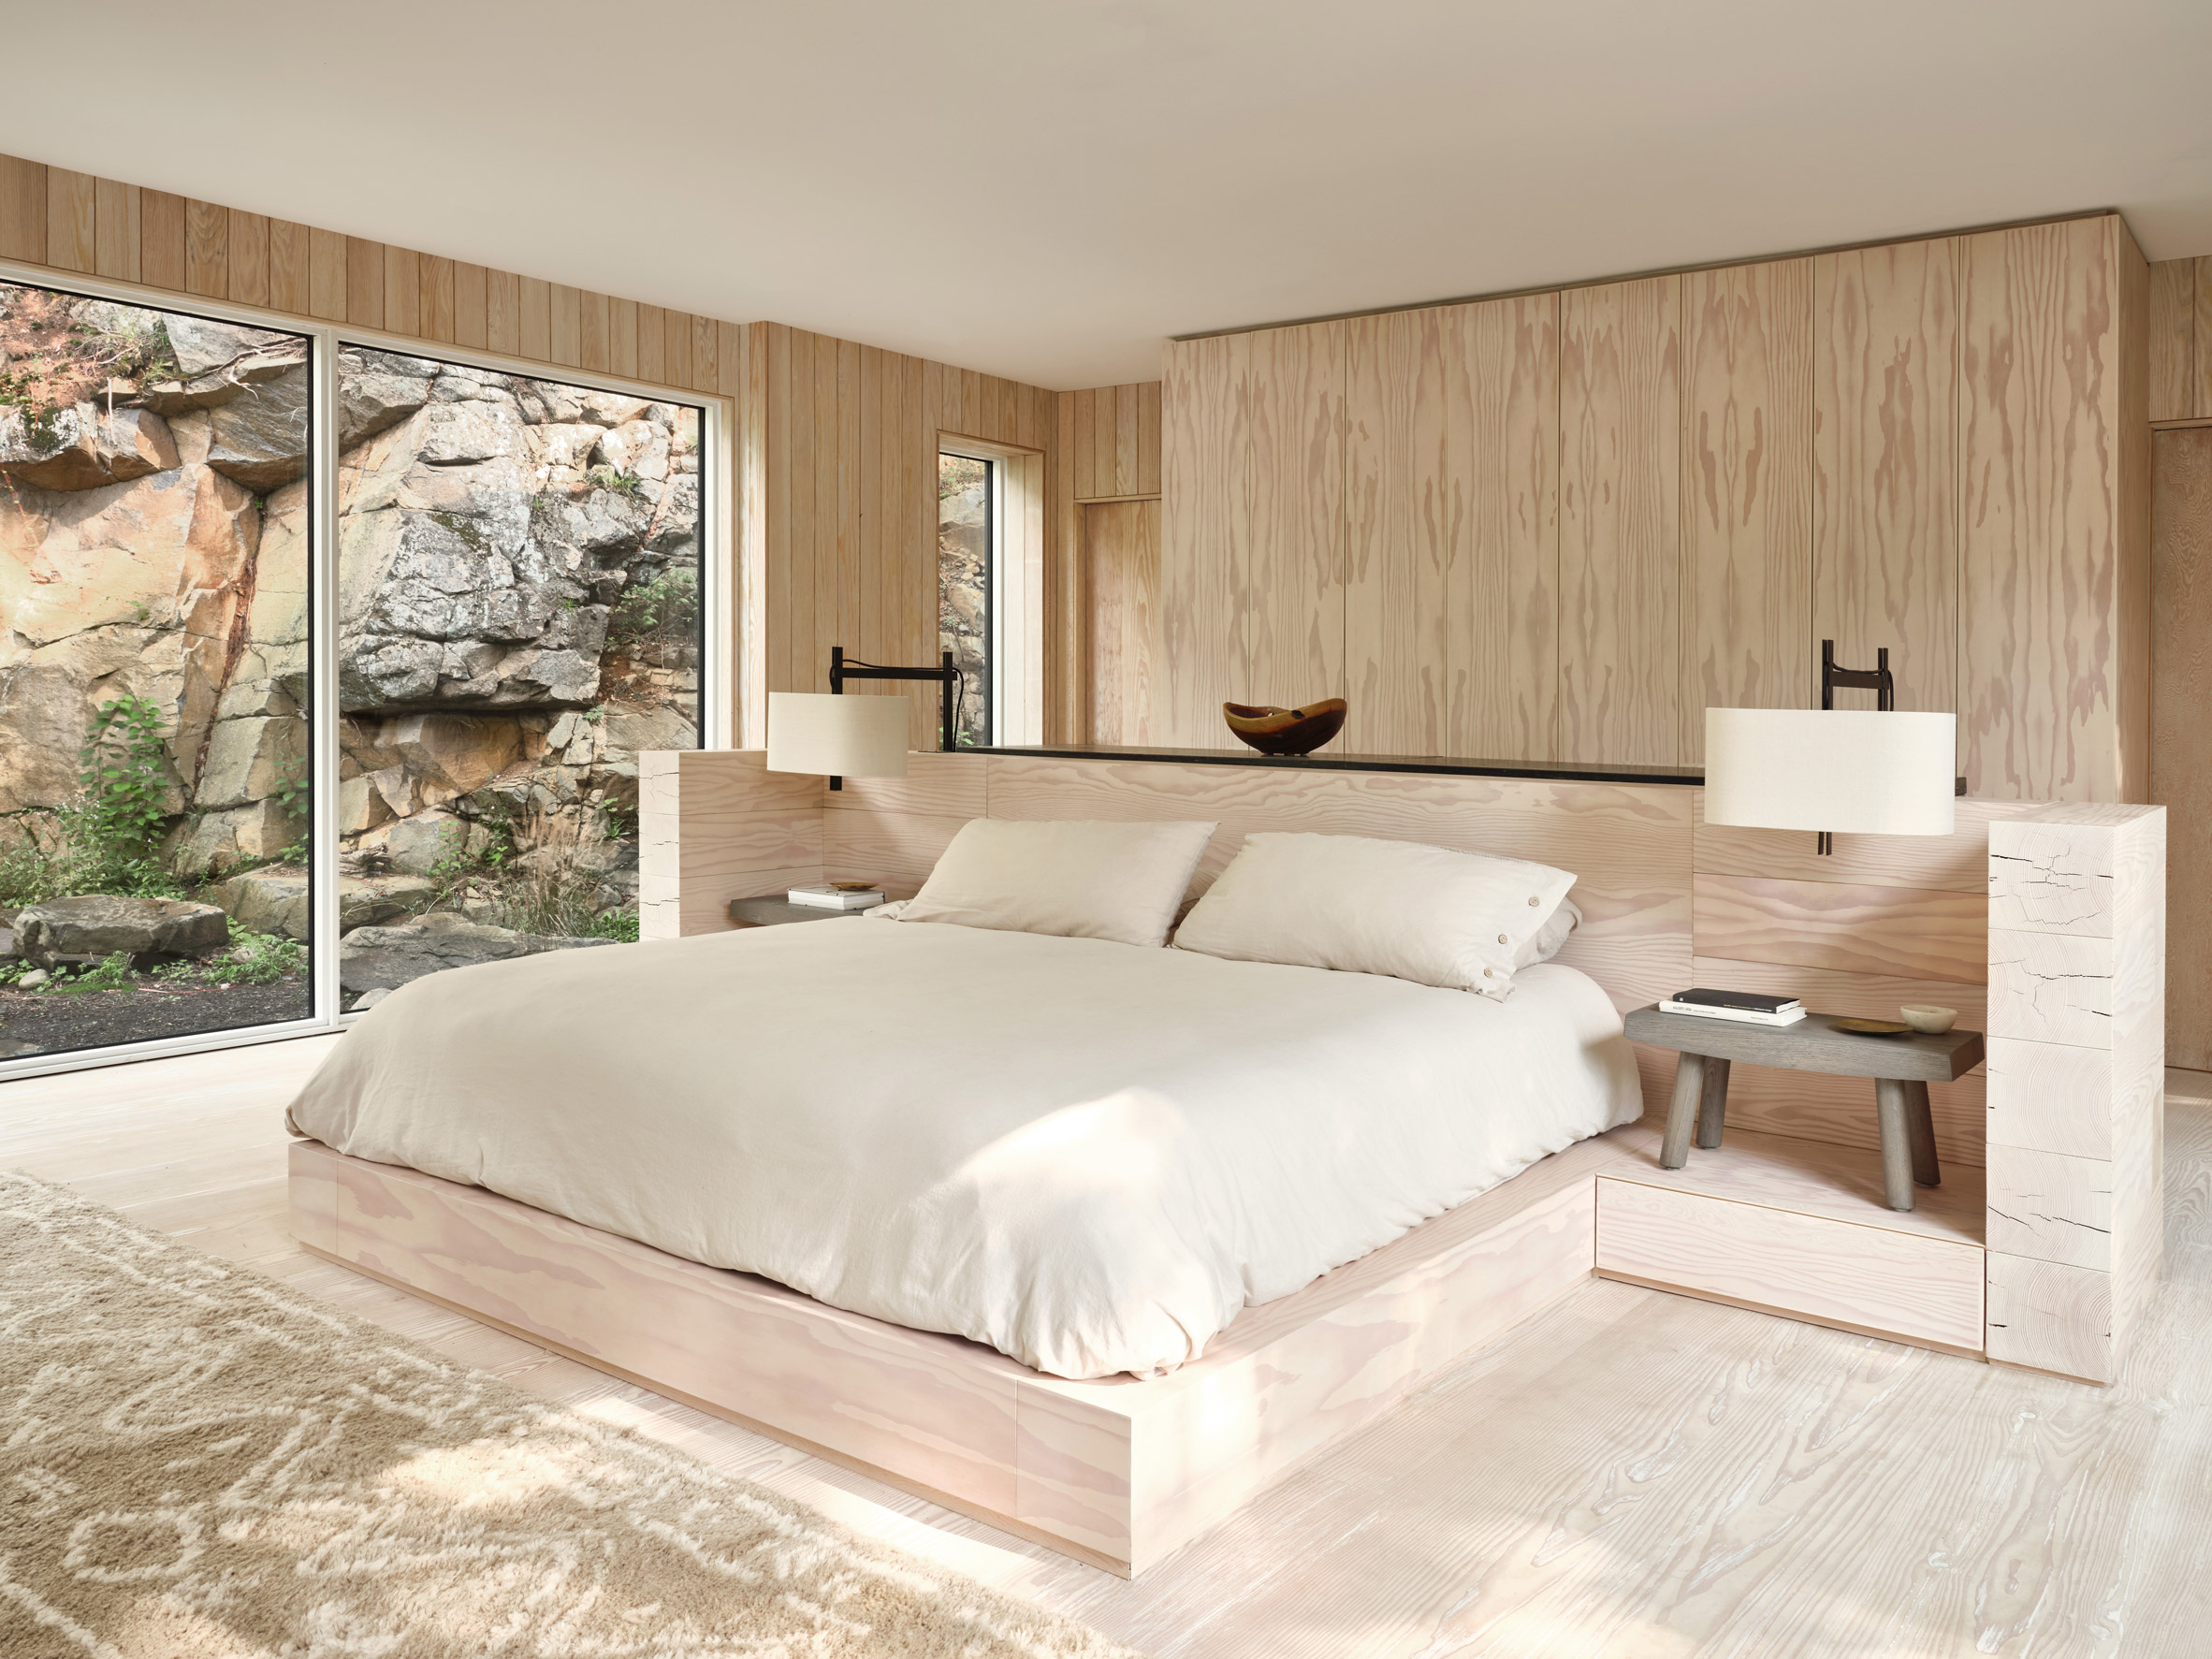 Studio Paolo Ferrari bedroom